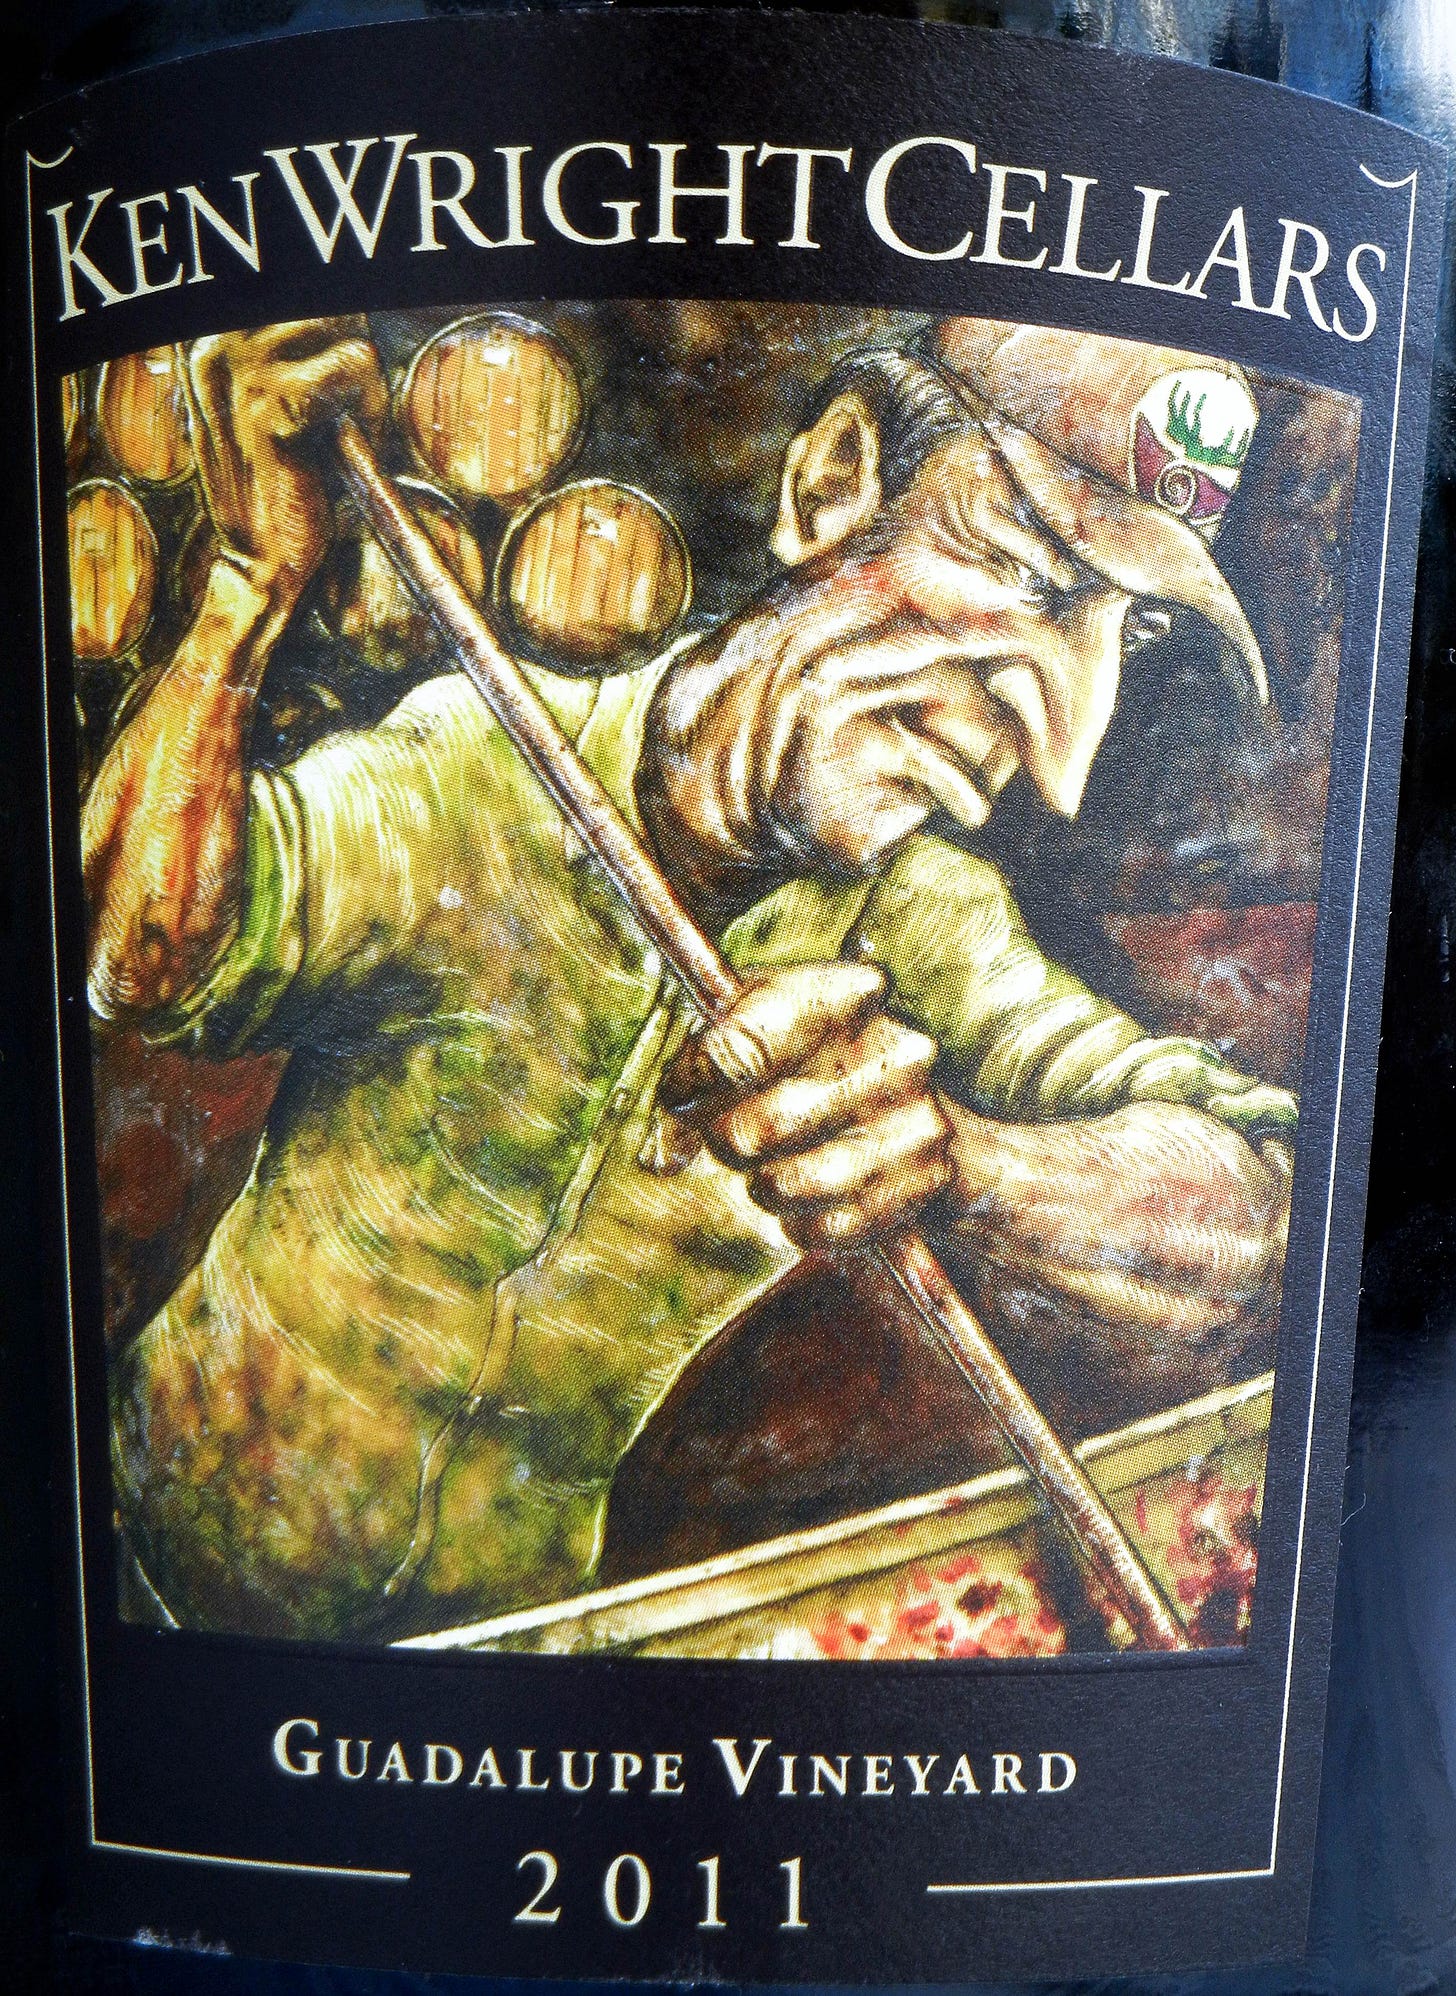 Ken Wright Cellars Guadalupe Vineyard Pinot Noir 2011 Label - BC Pinot Noir Tasting Review 17